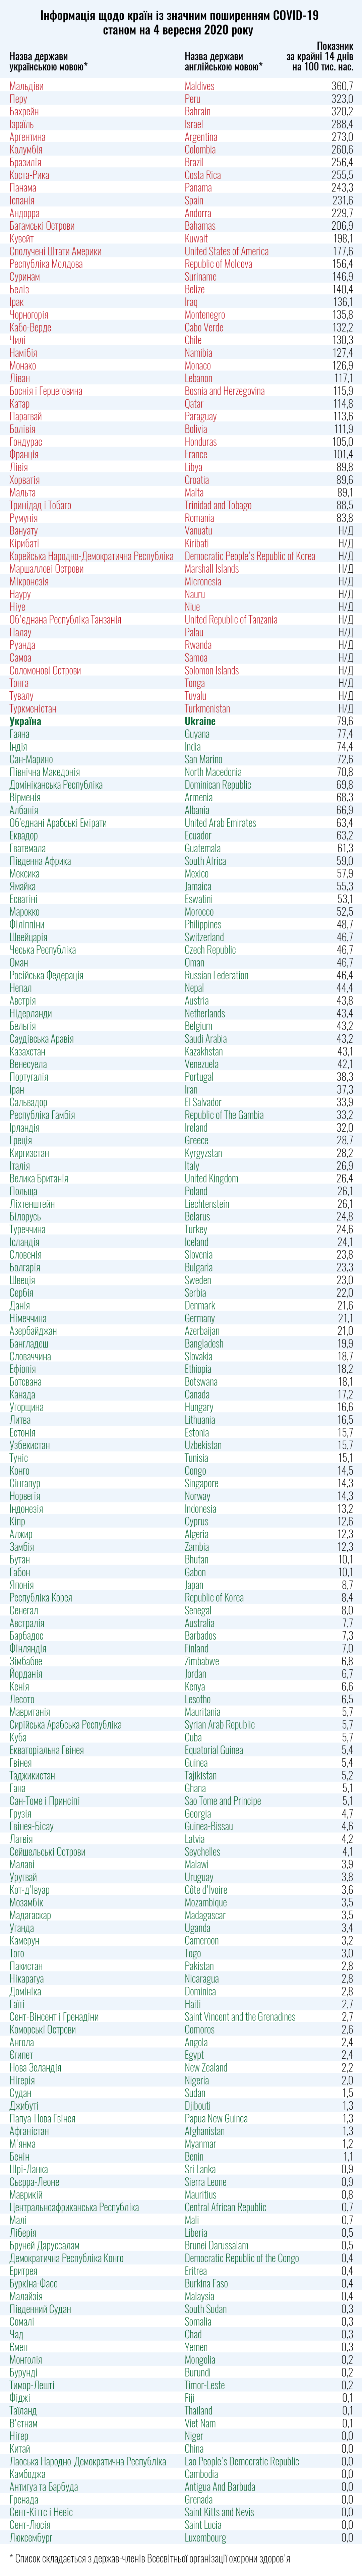 Green list countries update